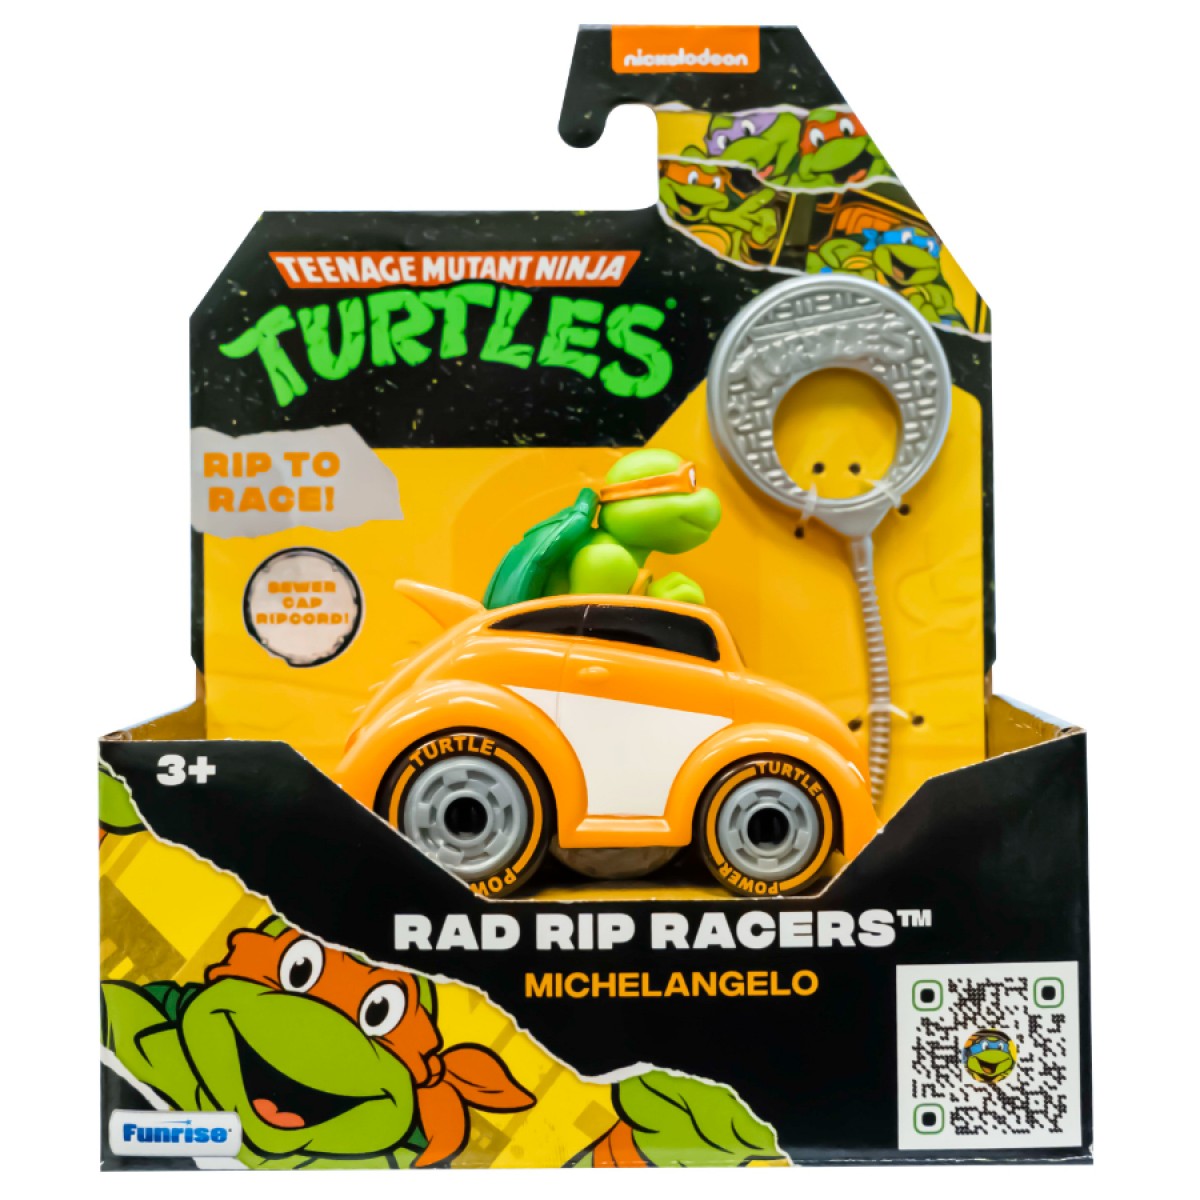 Teenage Mutant Ninja Turtles Rad Rip Racers Michelangelo